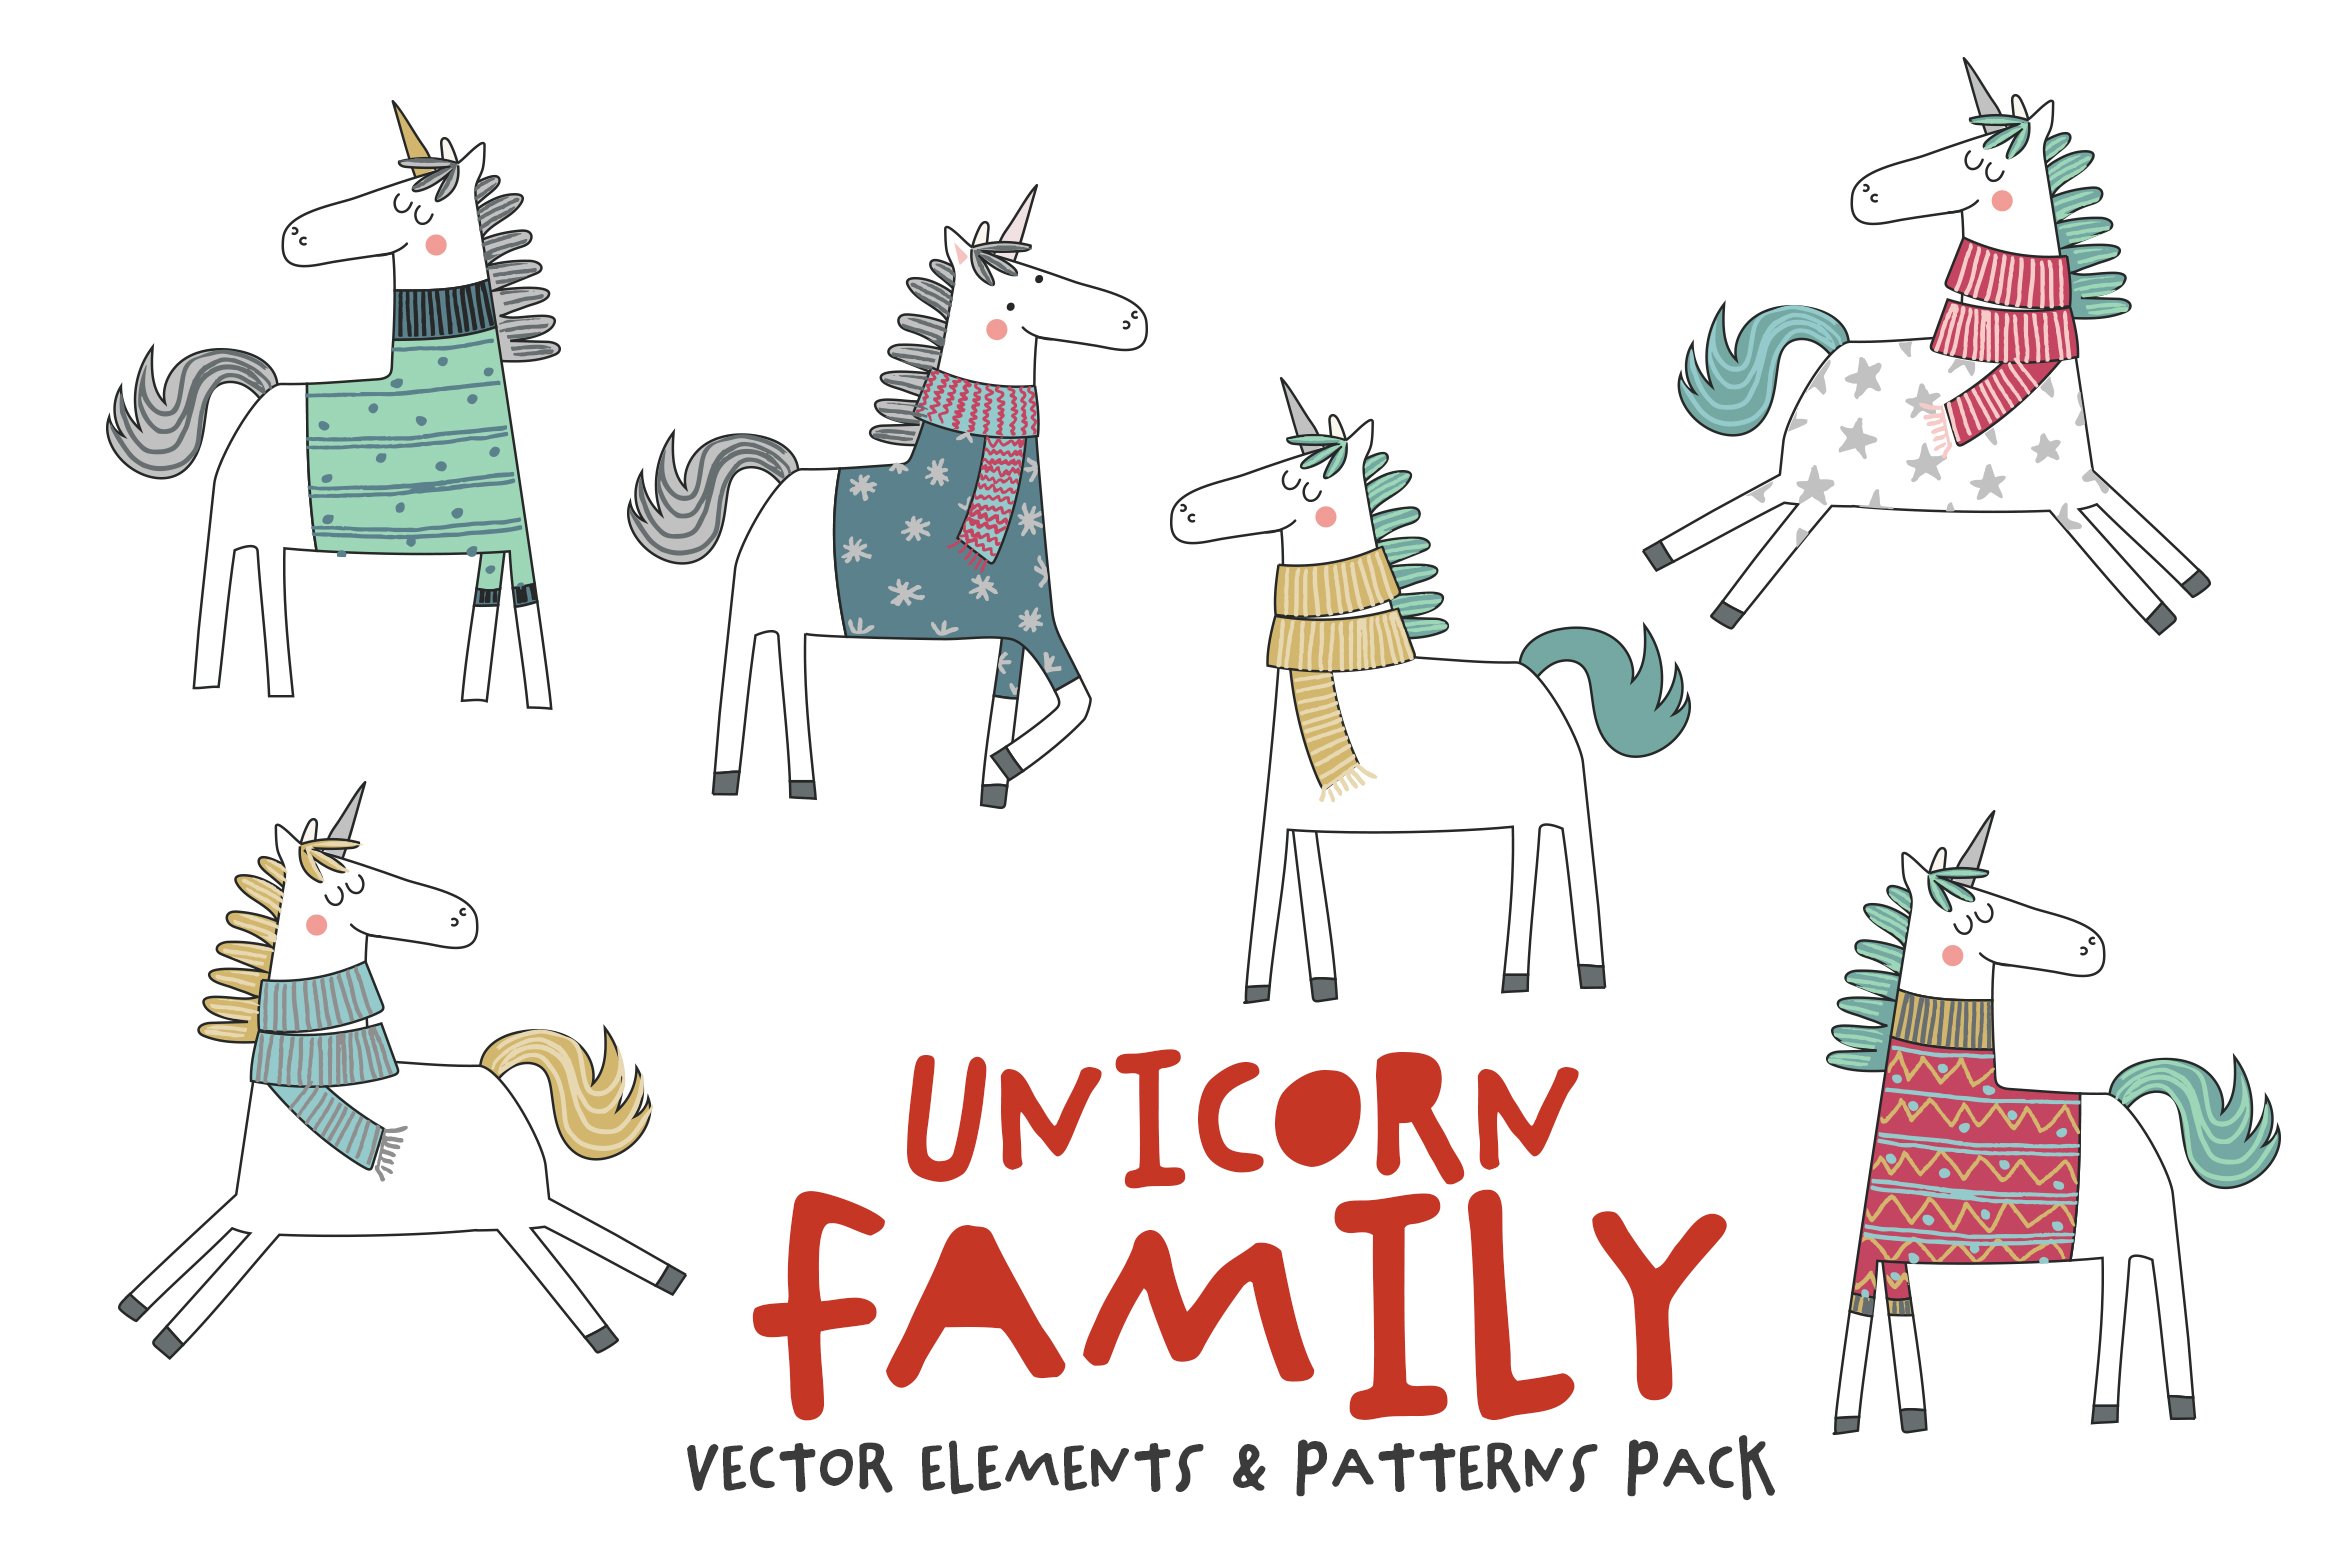 unicorn family pack 1 28234029 949